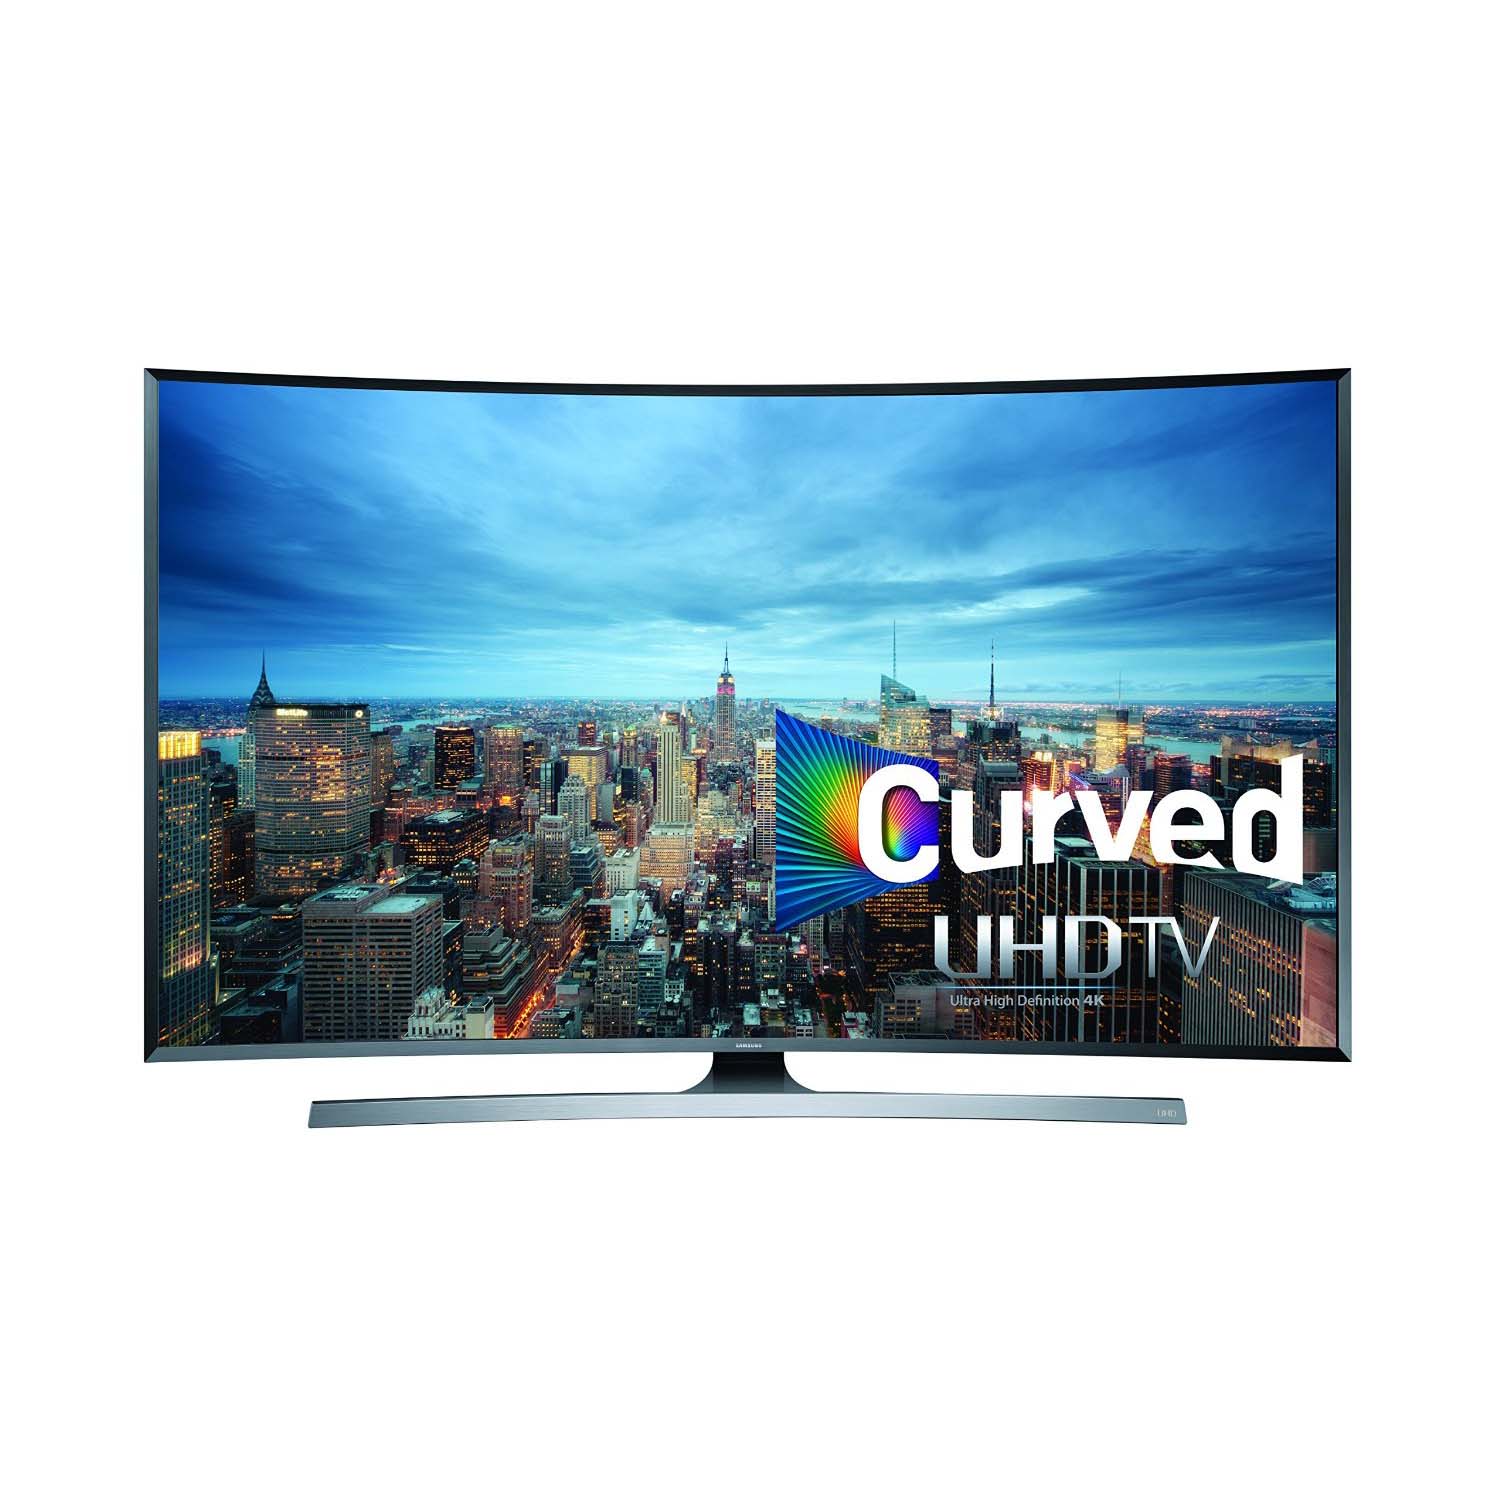 Samsung UN65JU7500 Curved 65-Inch 4K Ultra HD 3D Smart LED TV (2015 Model) *관부가세 별도*